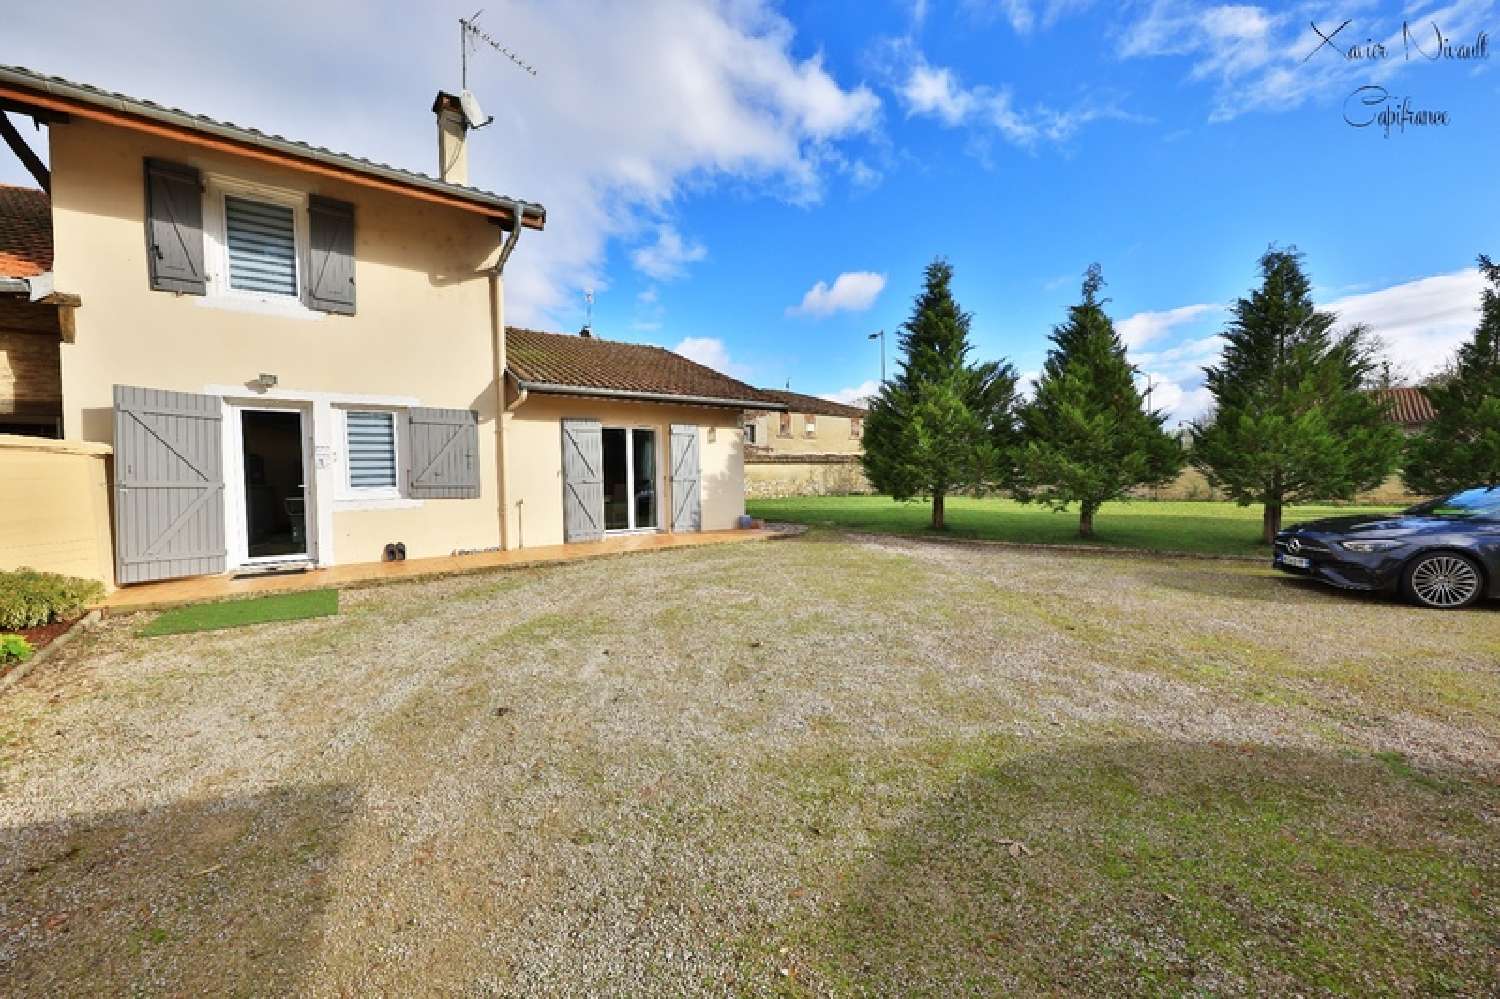  for sale village house Montrevel-en-Bresse Ain 1